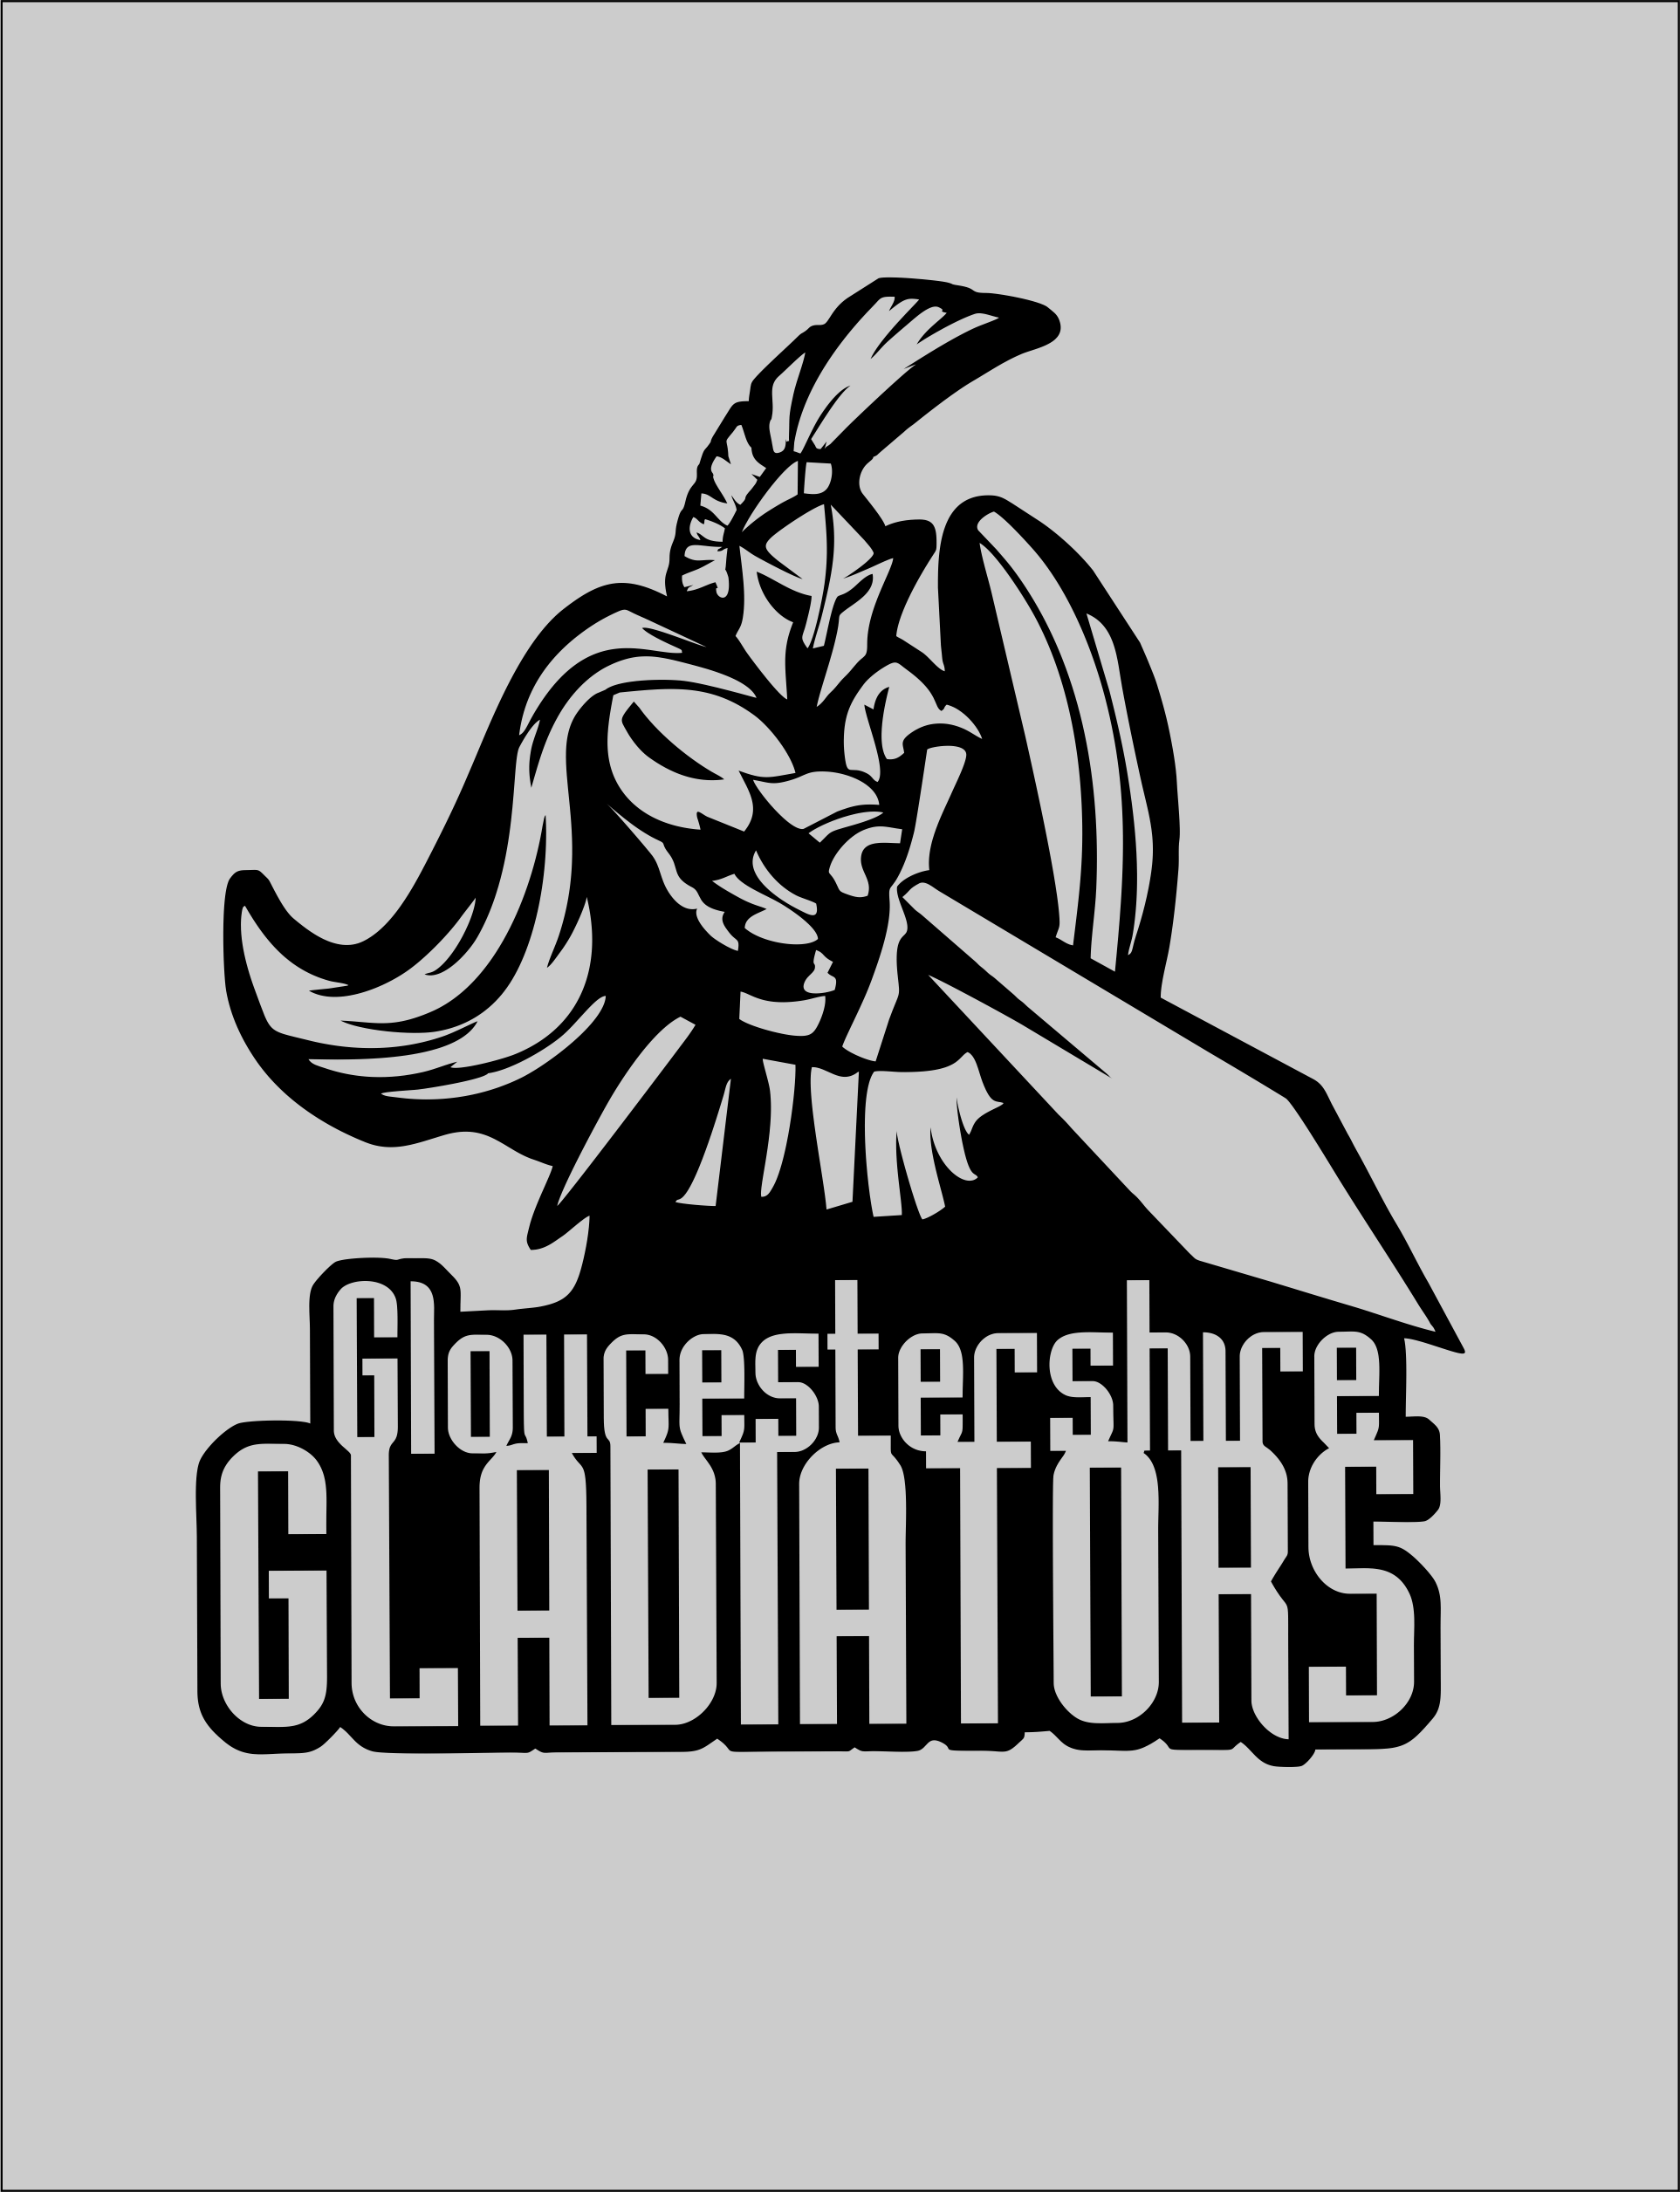 Gloucestershire Gladiators – University of Gloucestershire American Football Club